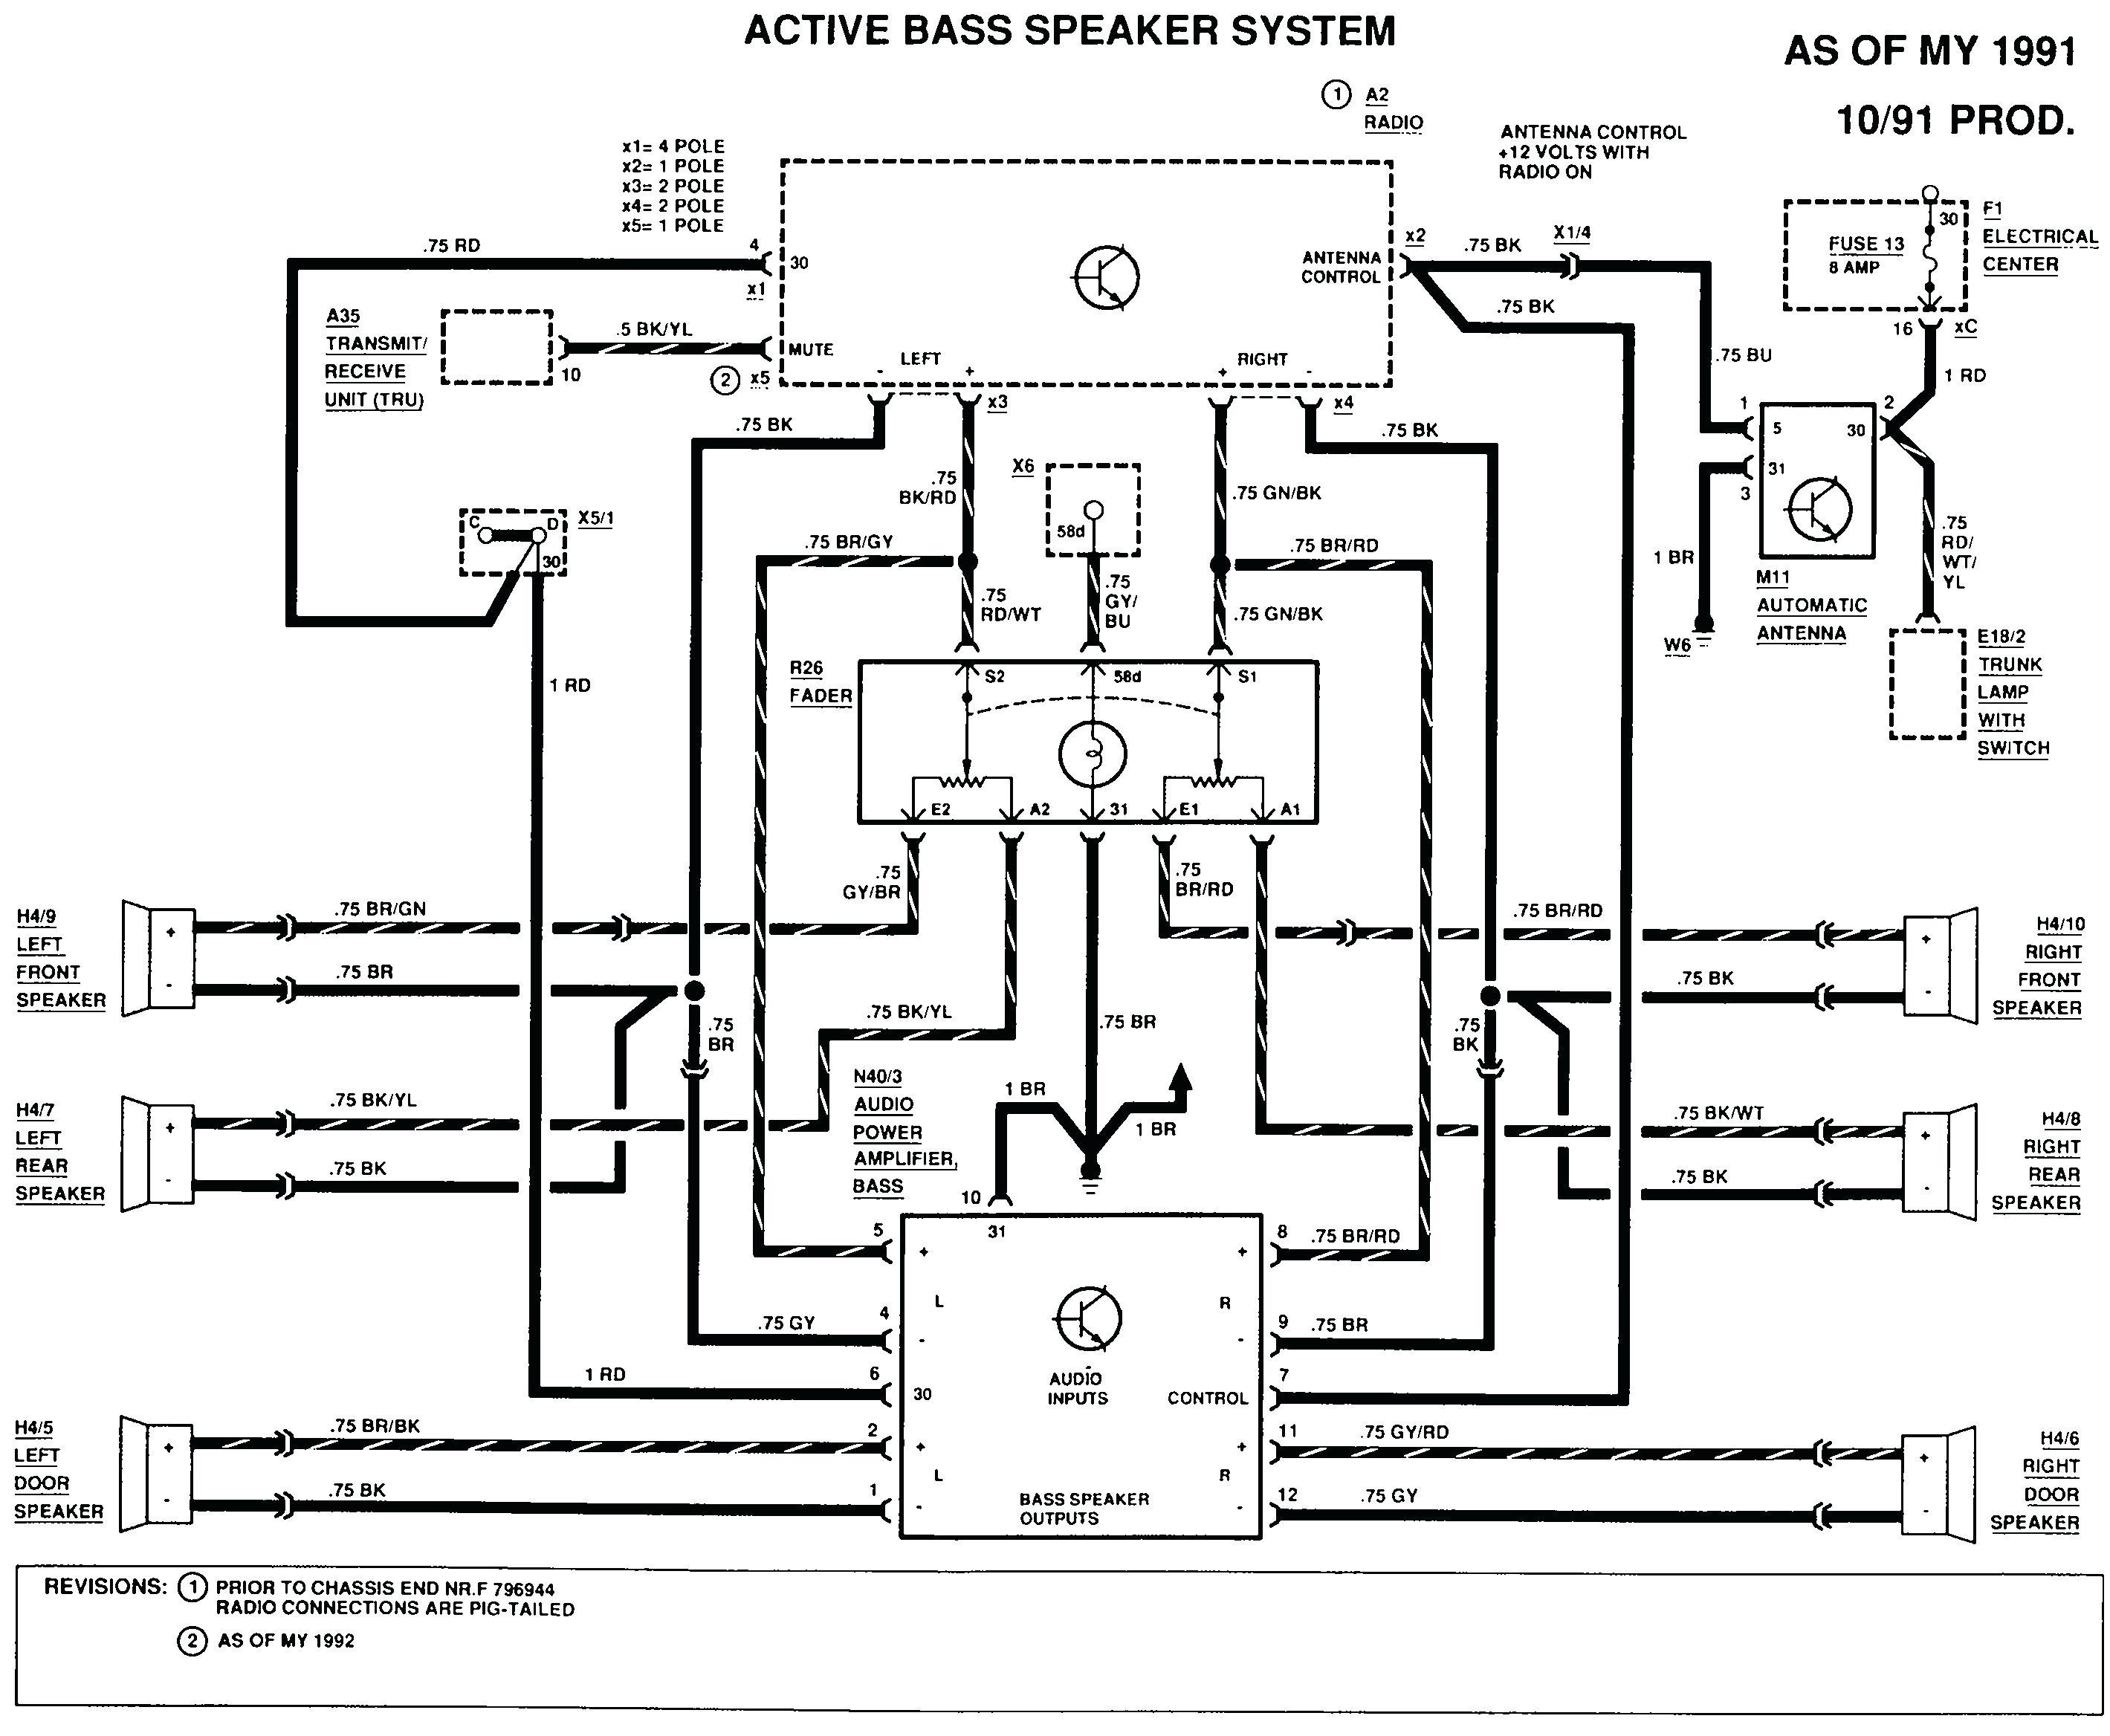 Whole House Audio Speaker Wiring | Wiring Library - Whole House Audio System Wiring Diagram